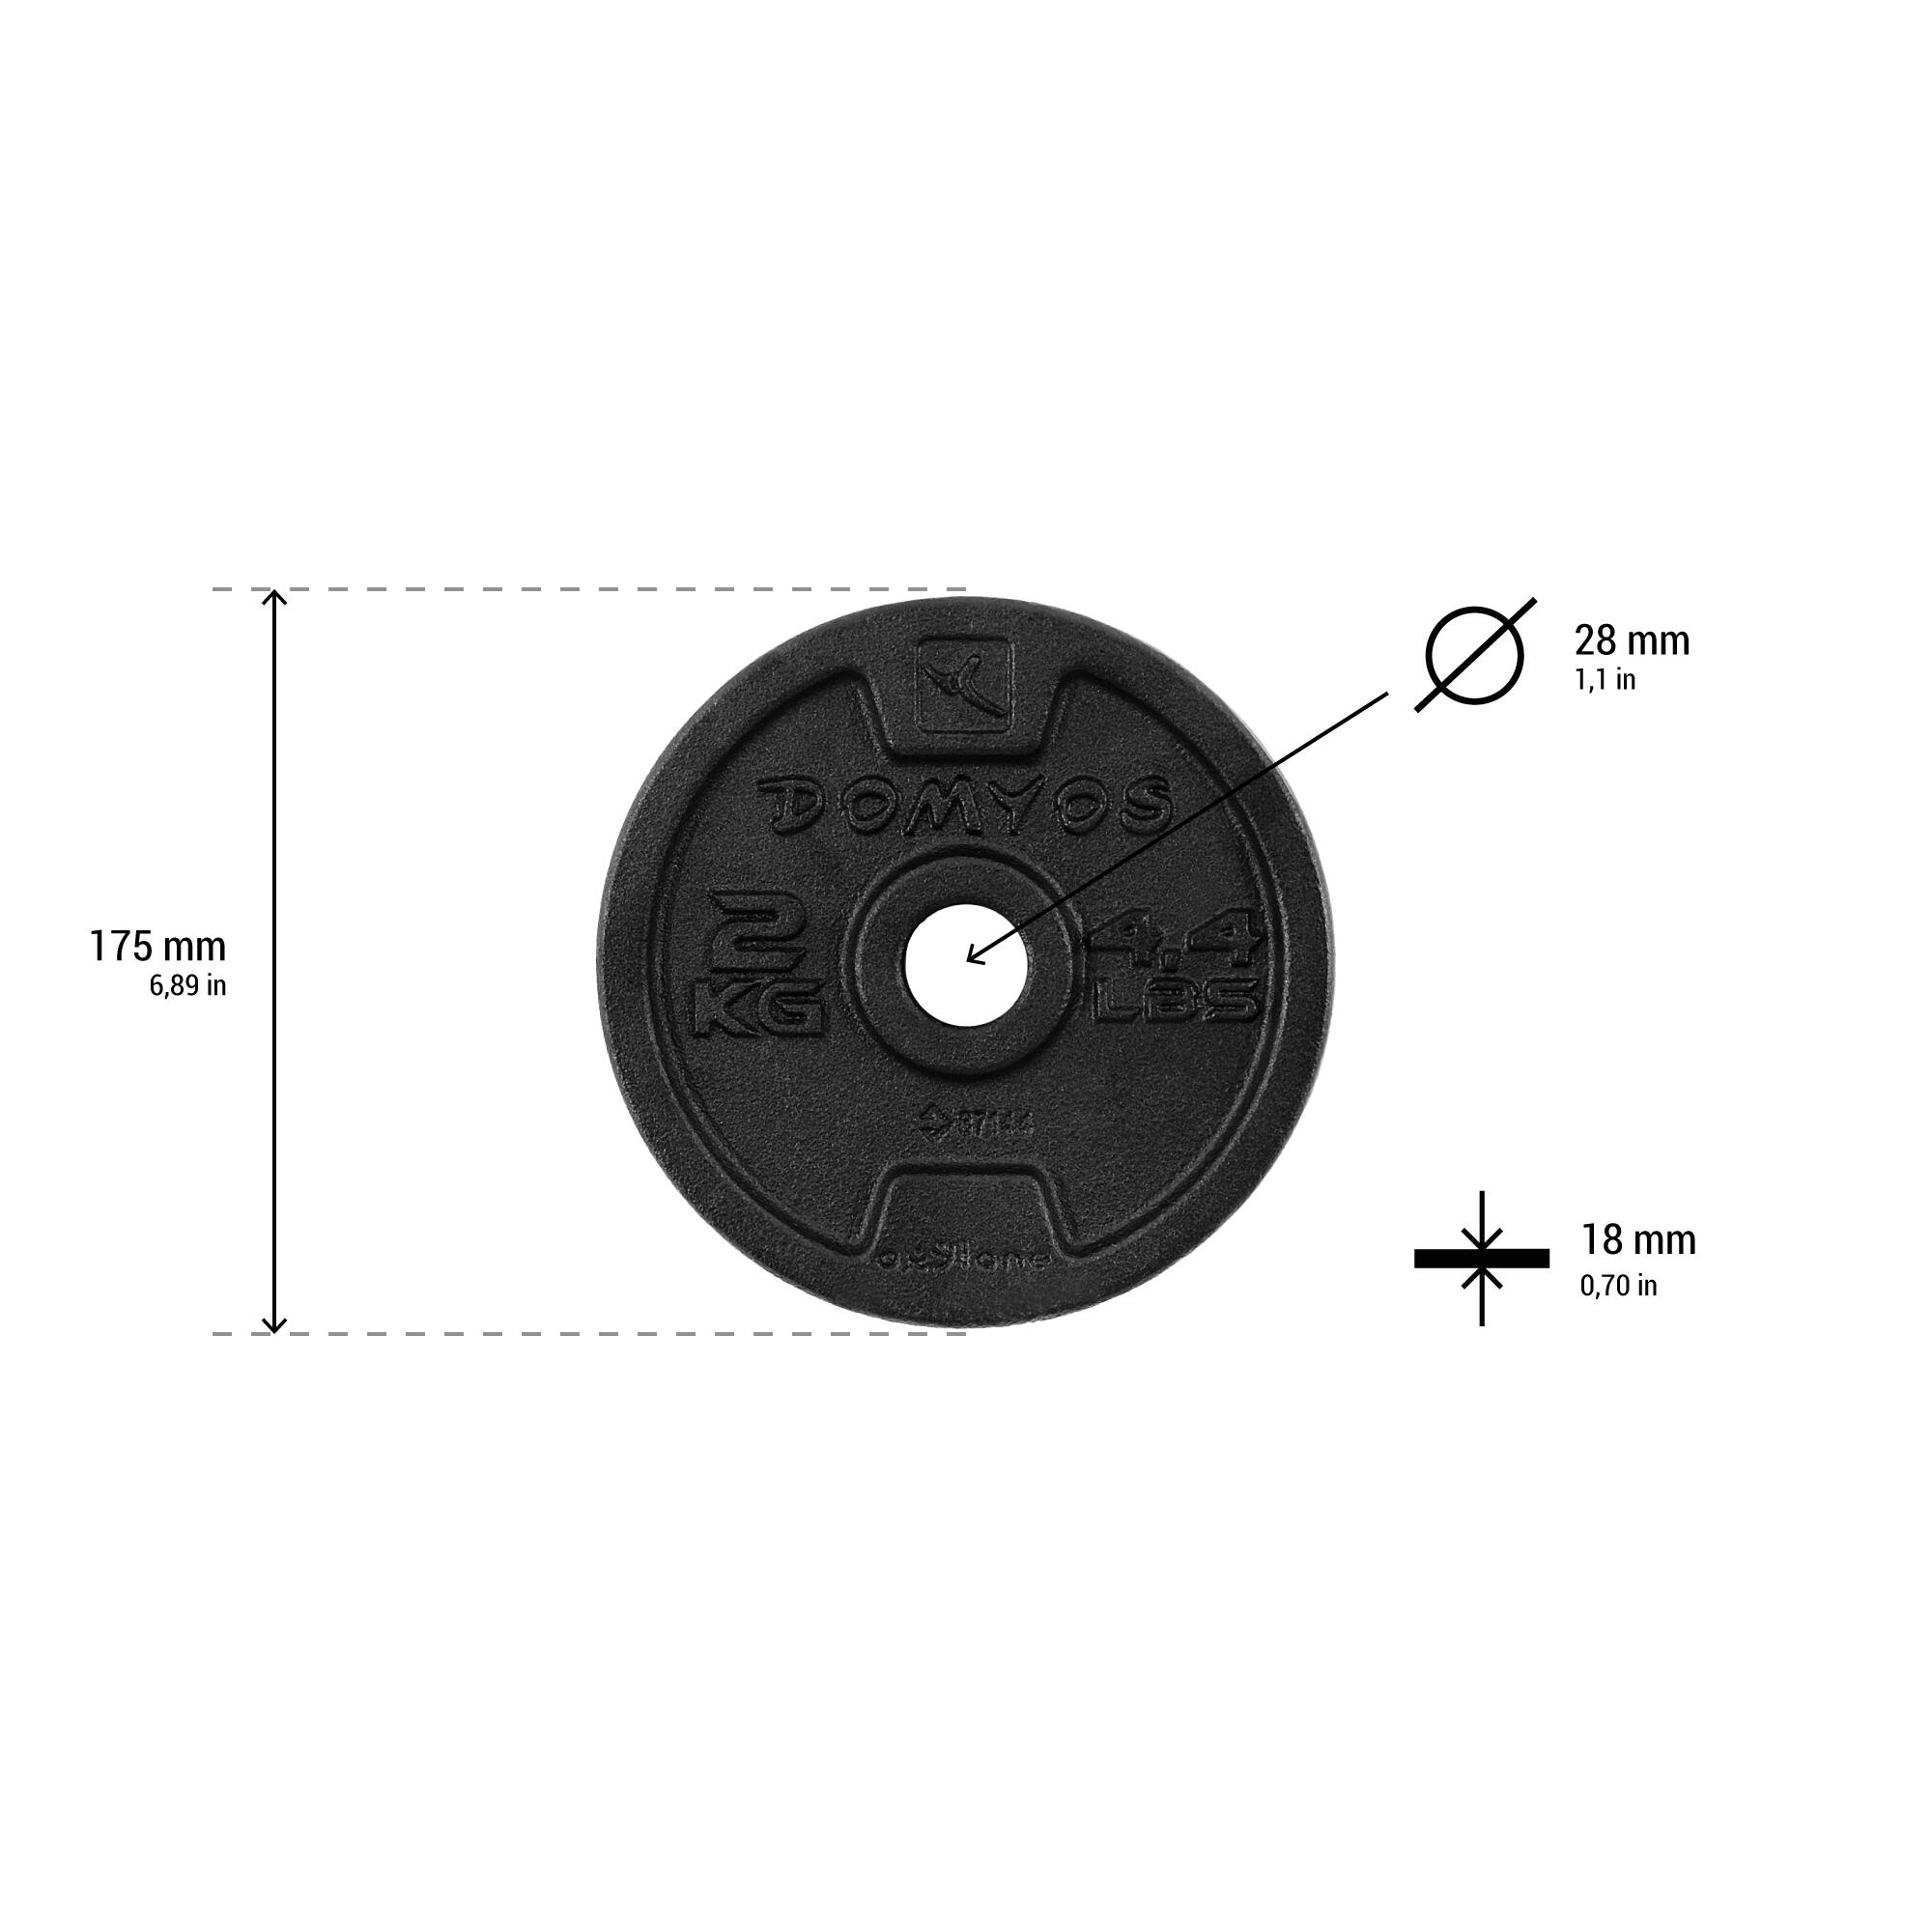 28 mm Cast Iron Weight Plate - MDF Black - CORENGTH